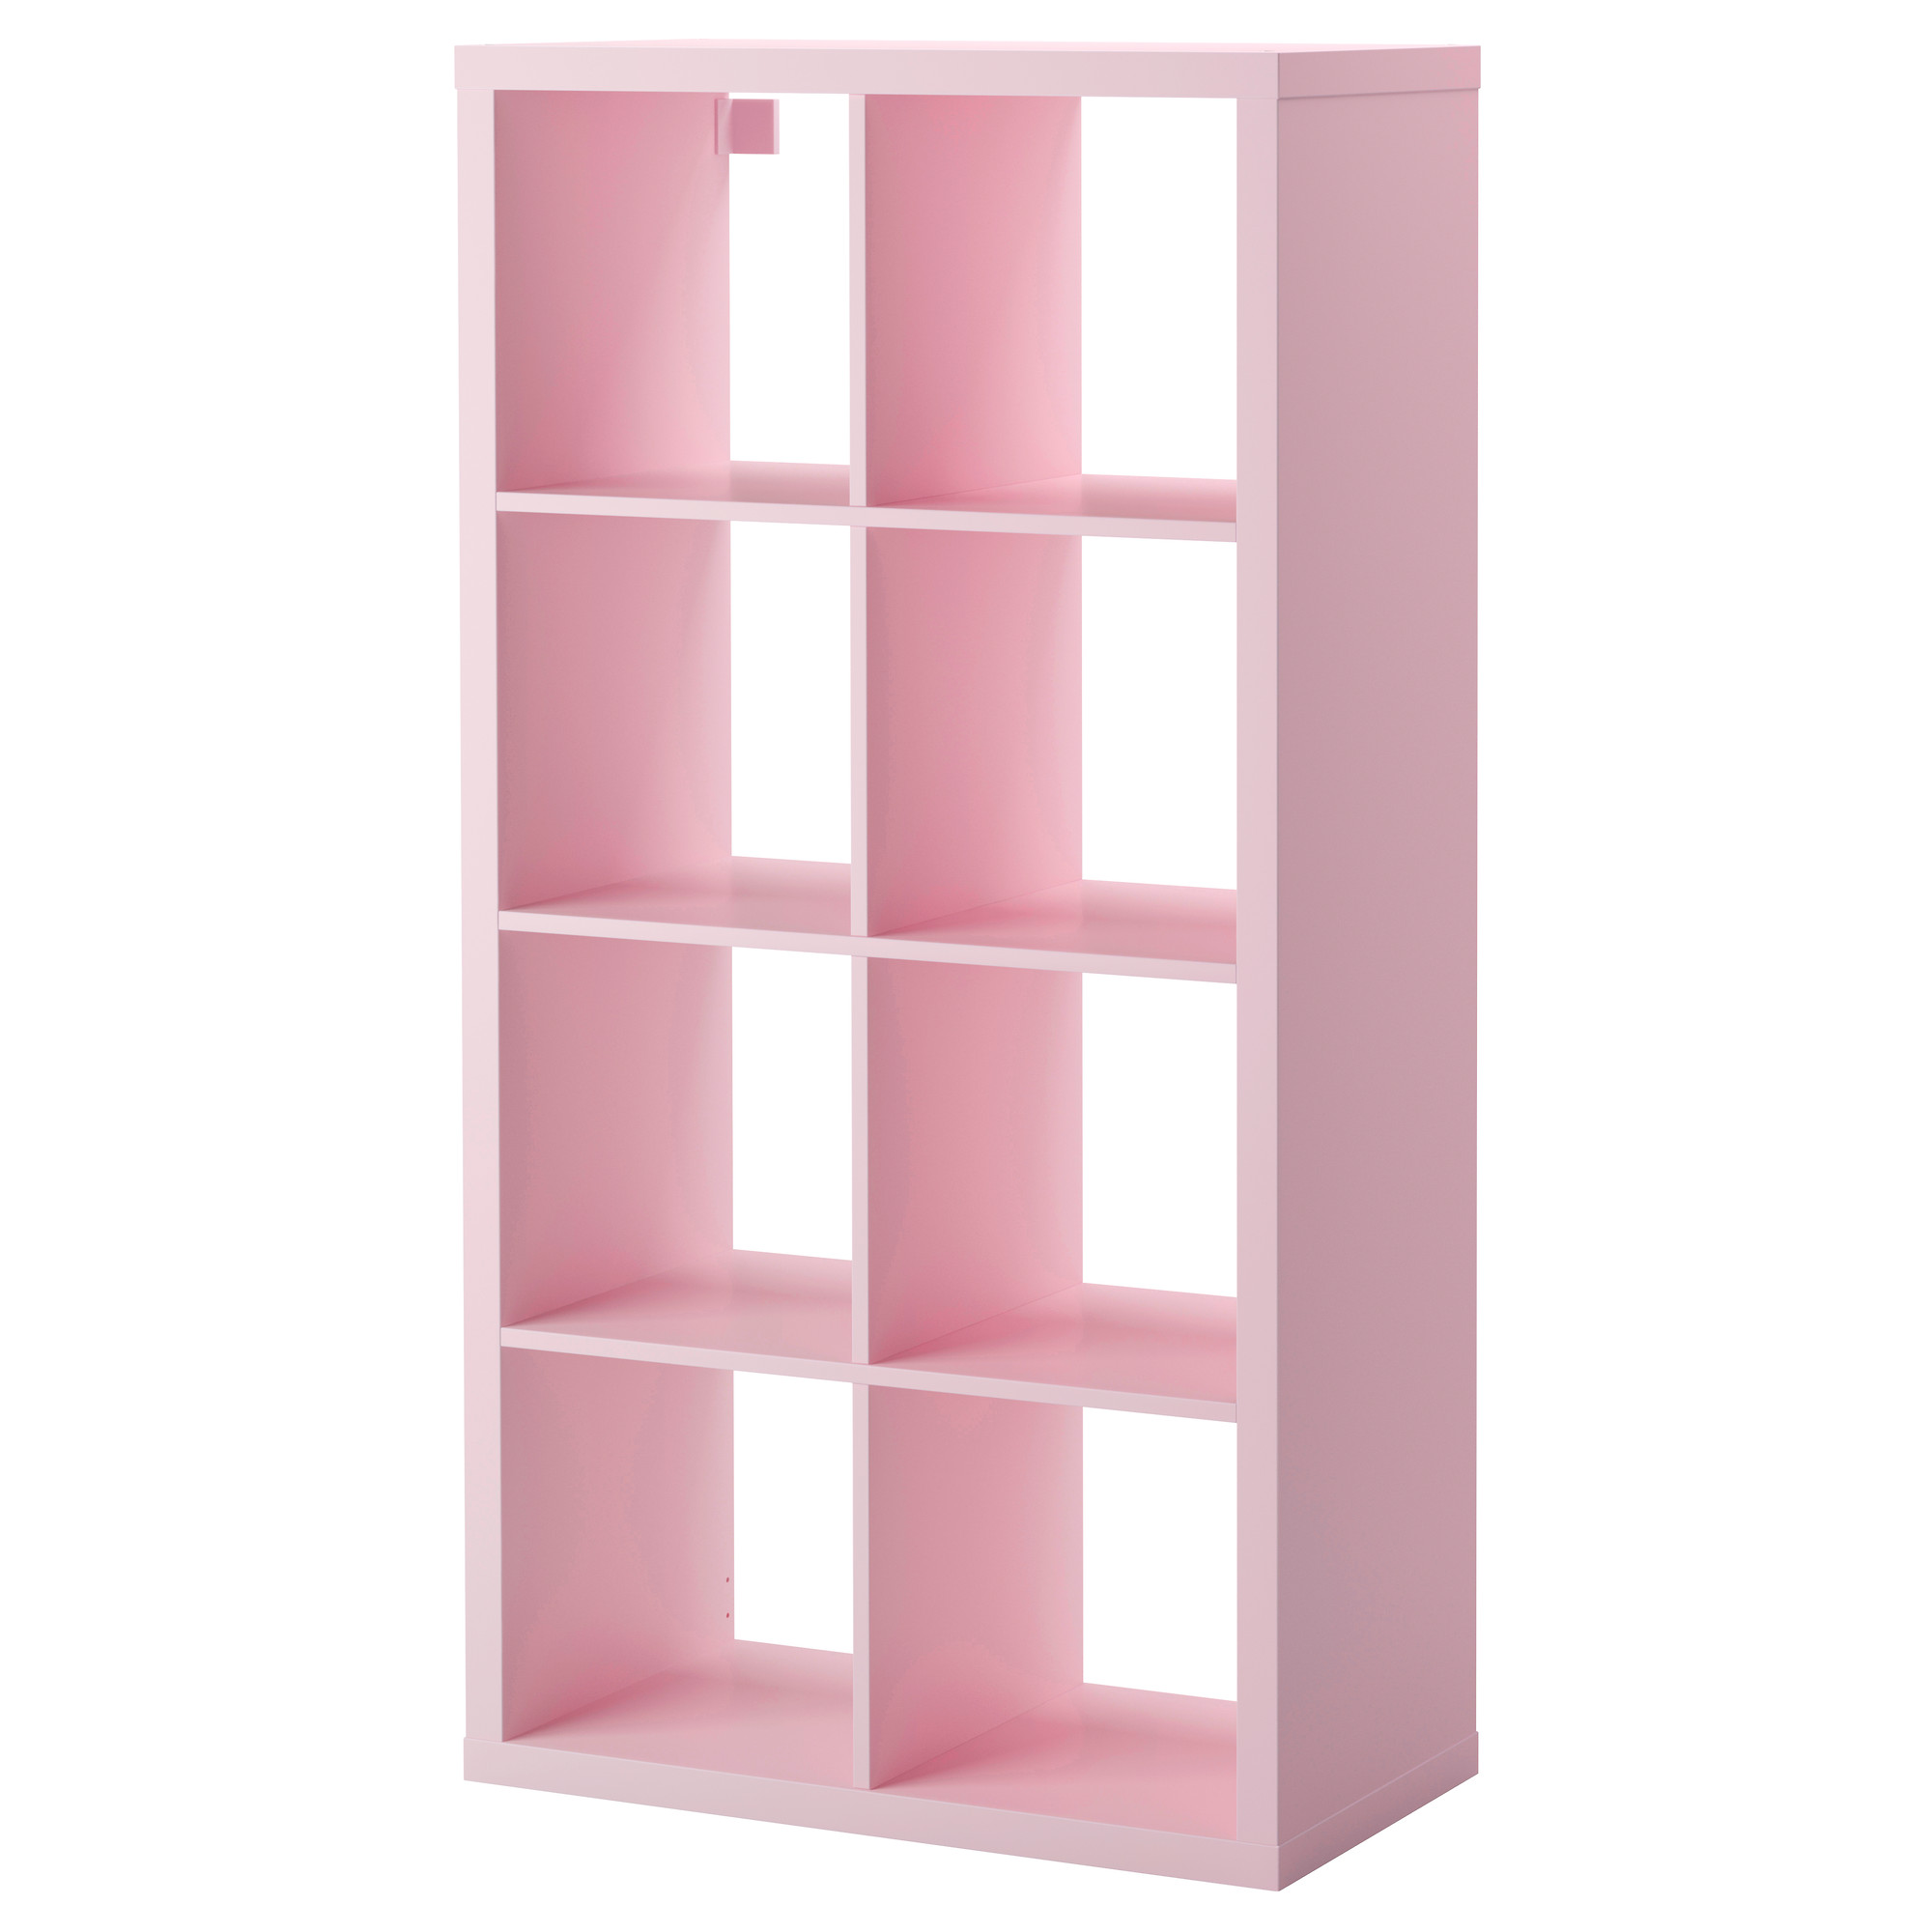 Стеллажи челны. Стеллаж икеа. Ikea Kallax Shelf Unit. Стеллаж икеа розовый. Шкаф стеллаж икеа.